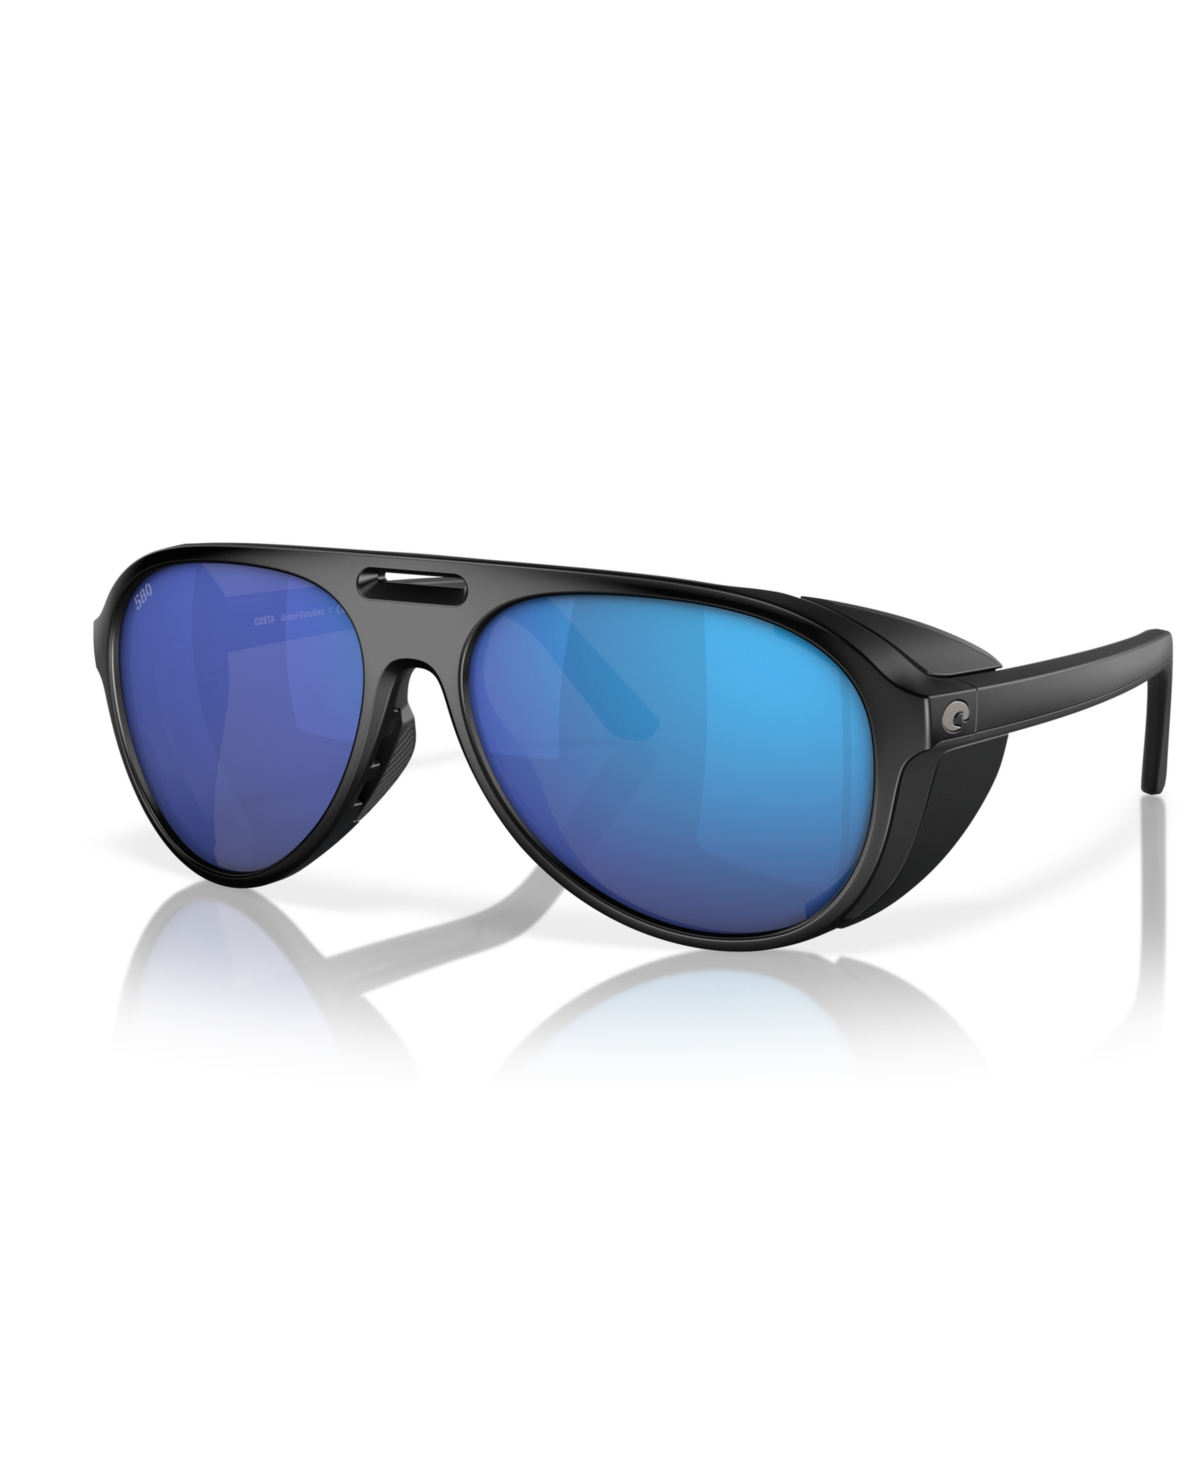 Men's Polarized Sunglasses, Grand Catalina 6S9117 - Matte Black, Gold